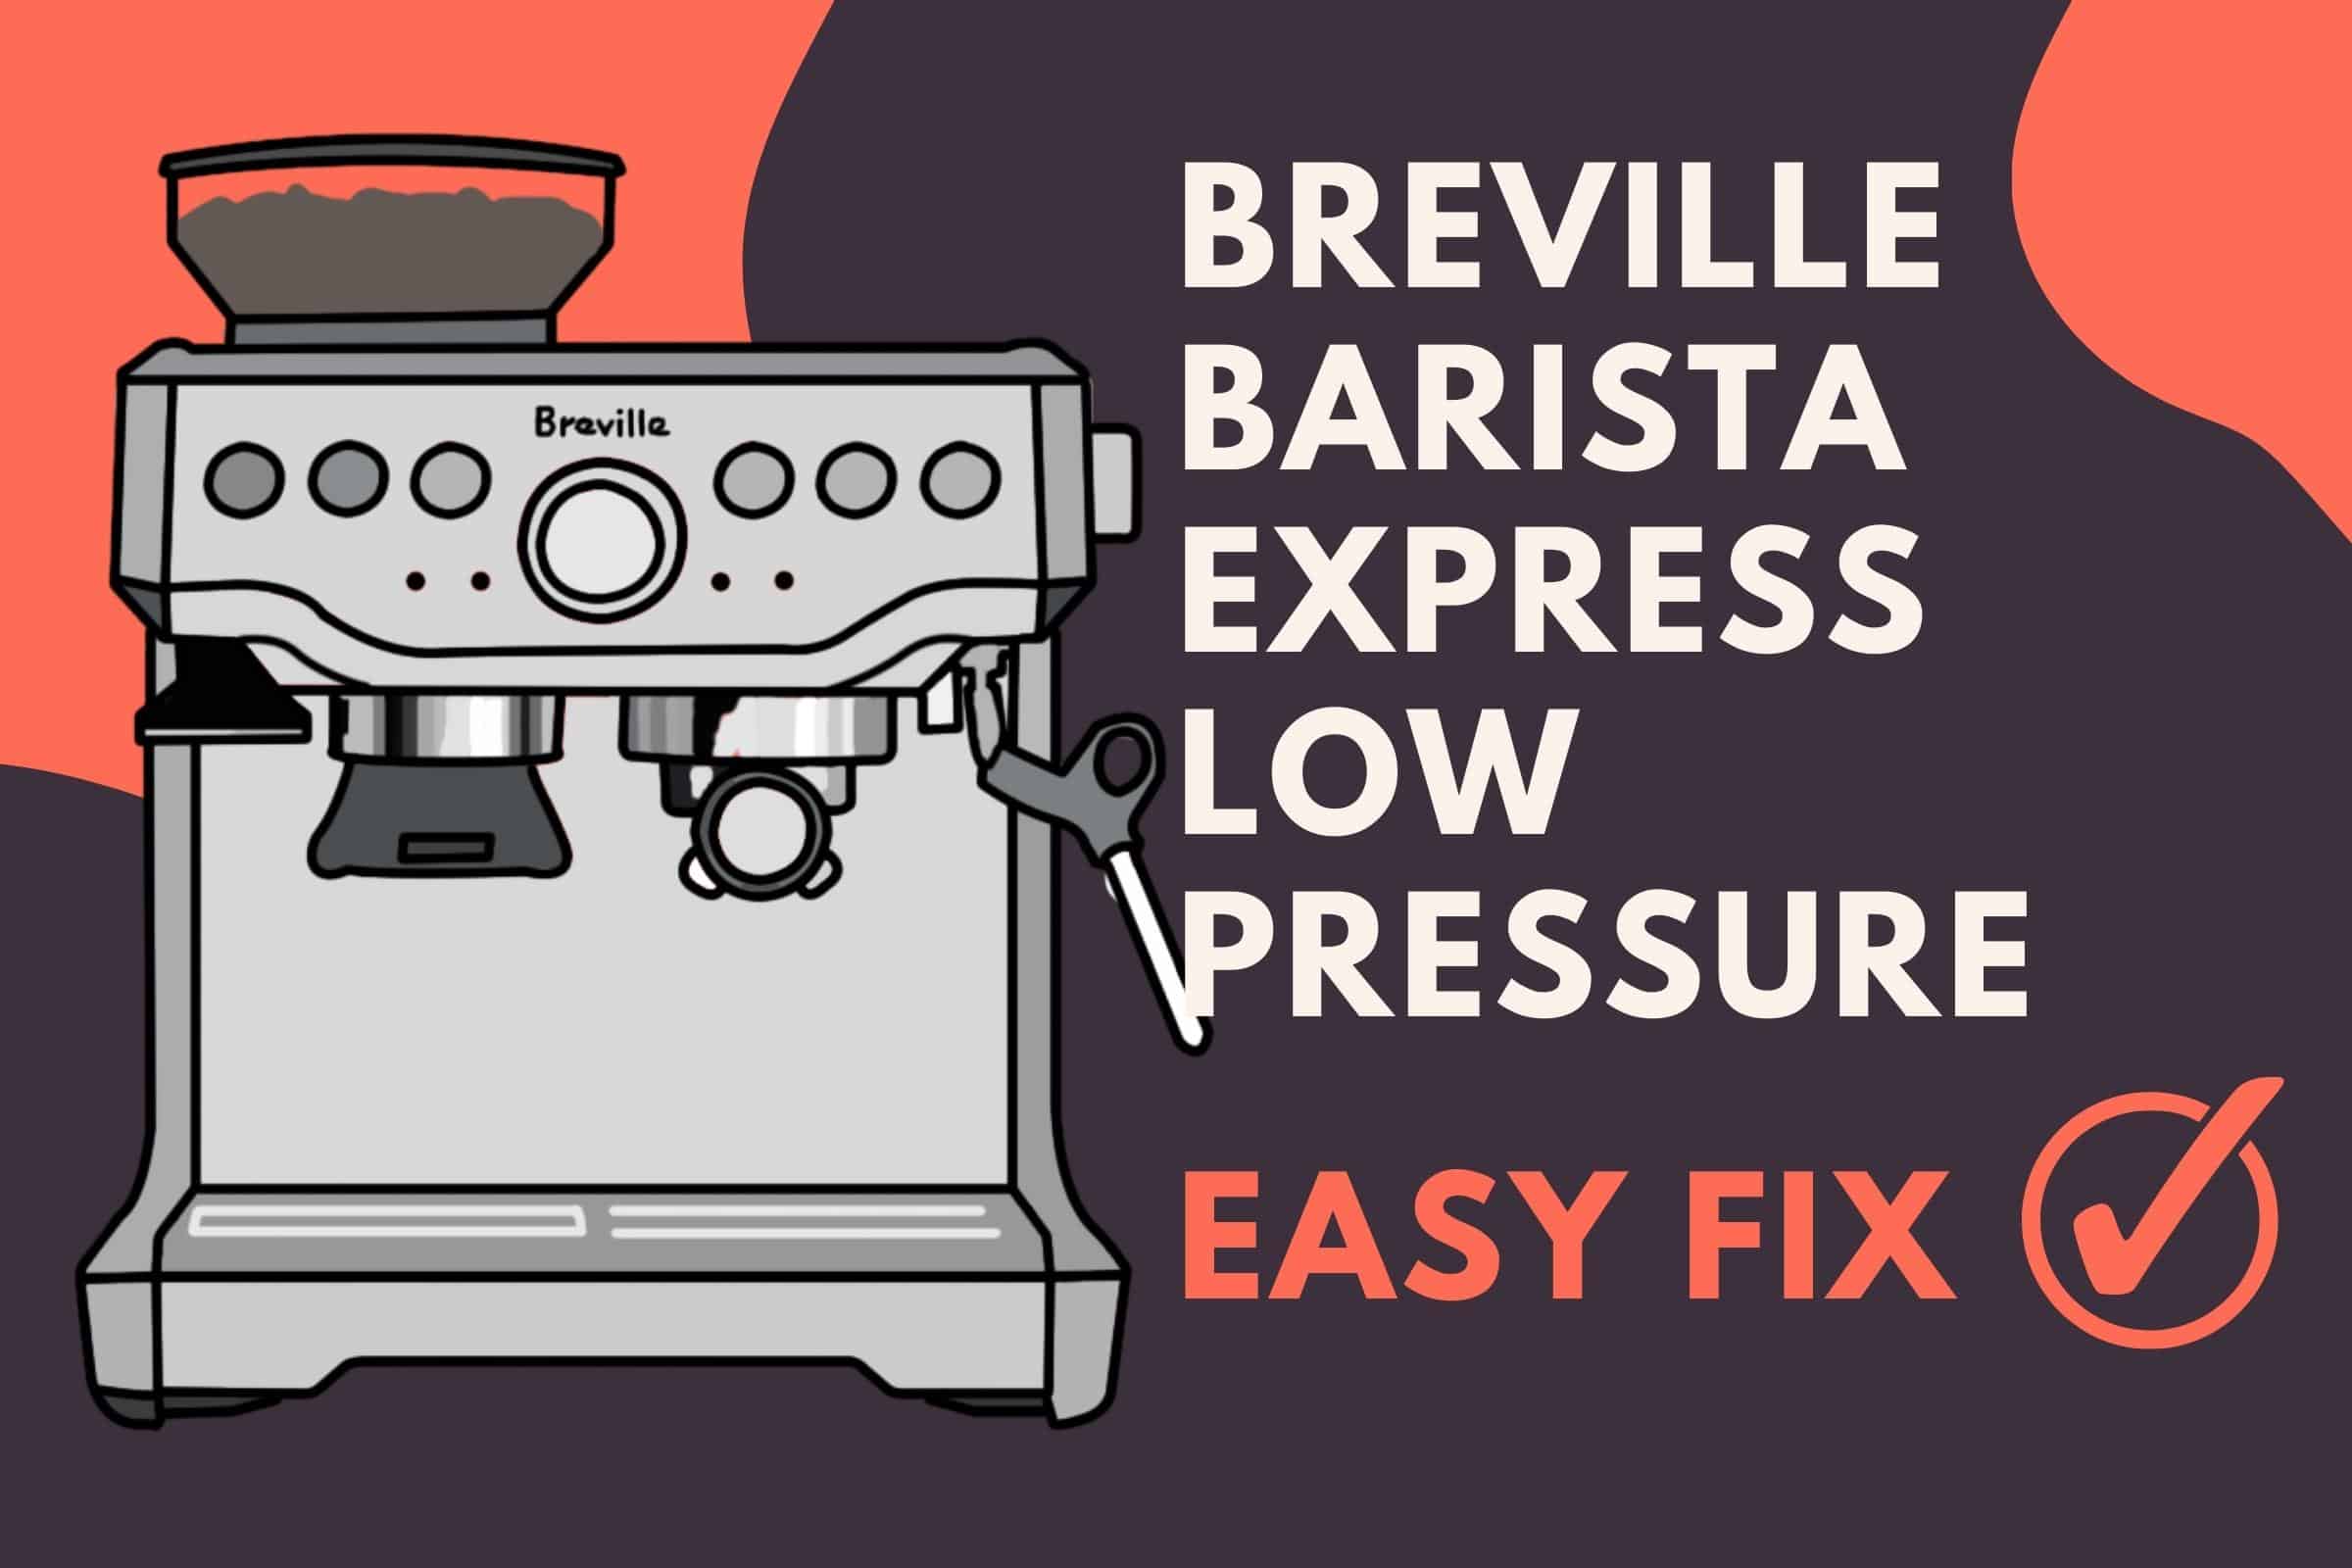 Breville barista express low pressure